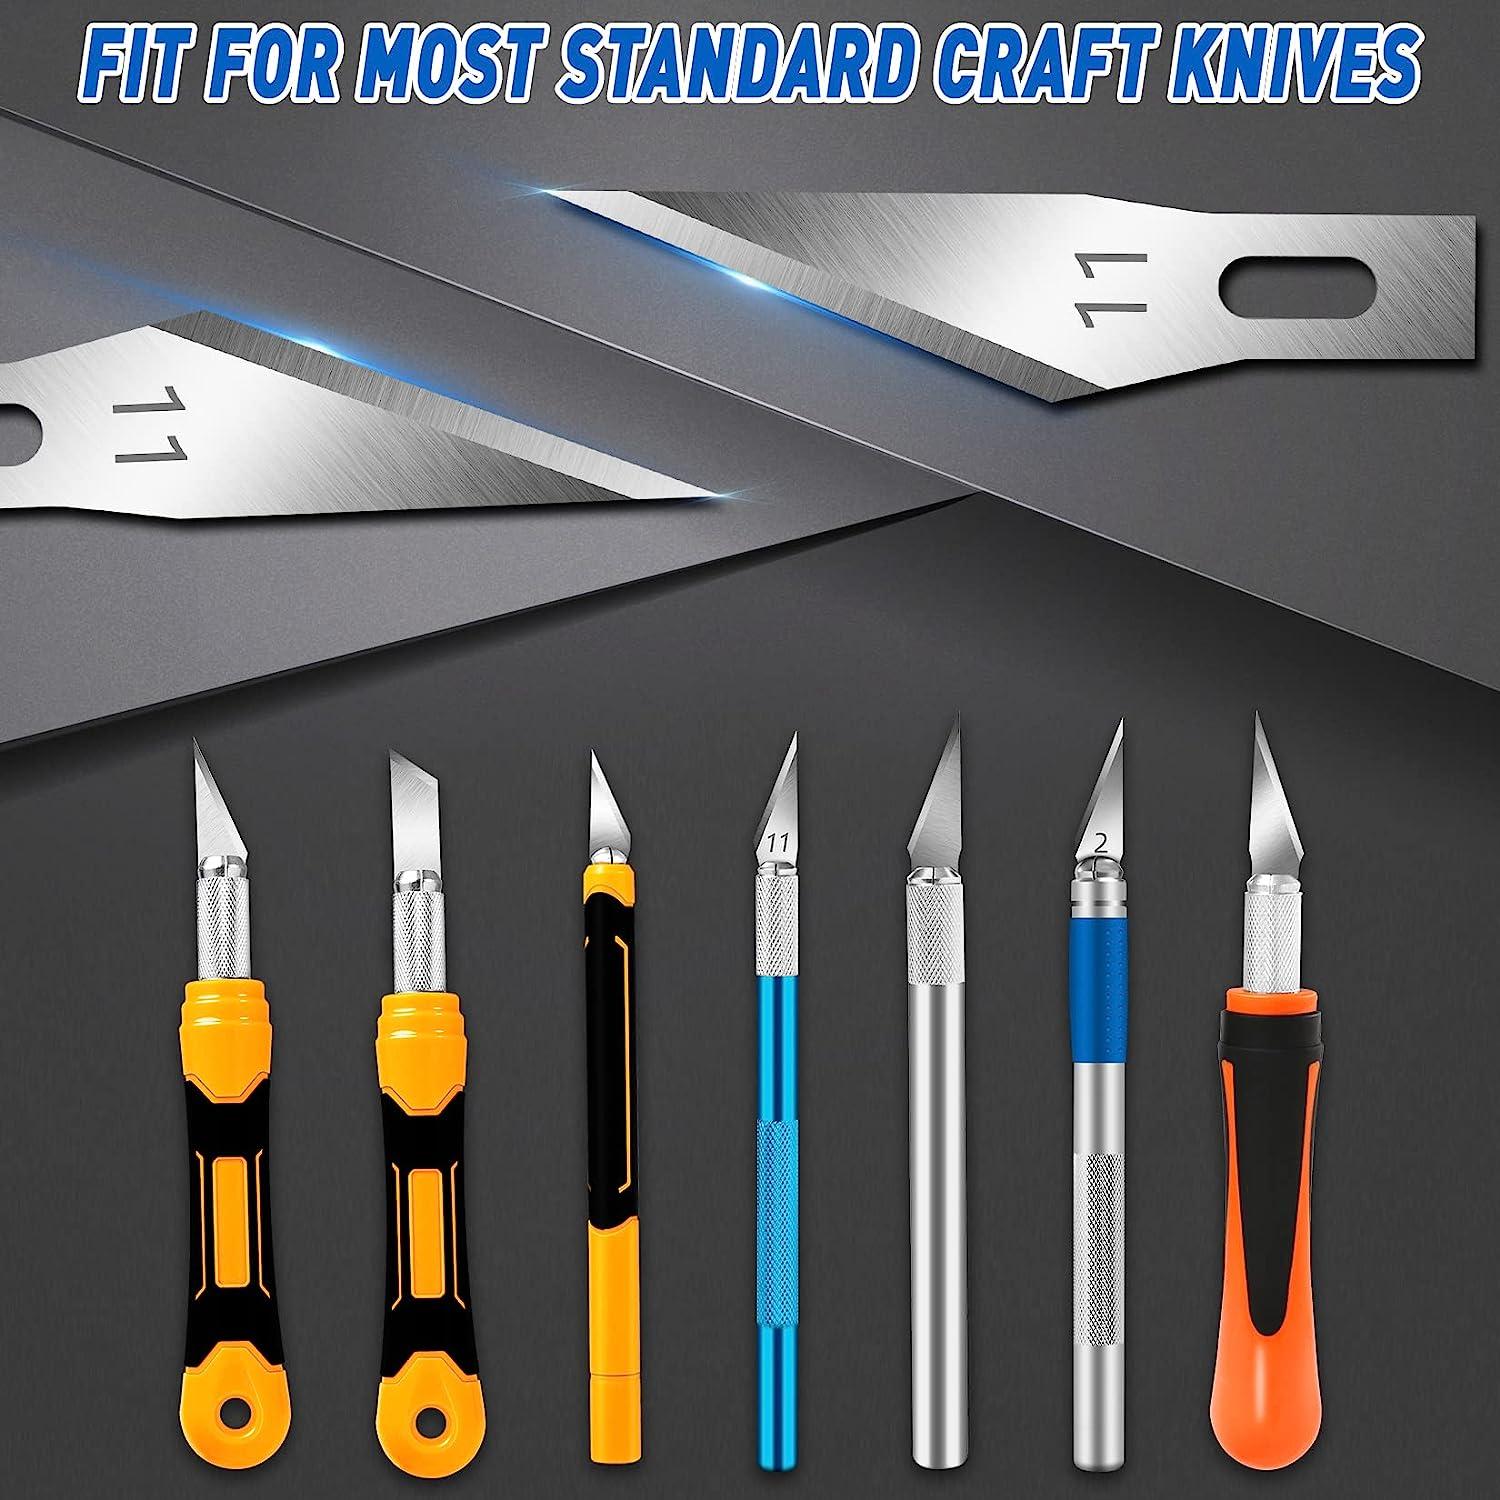 DIYSELF 100 PCS Exacto Knife Blades, SK5 Carbon Steel #11 Exacto